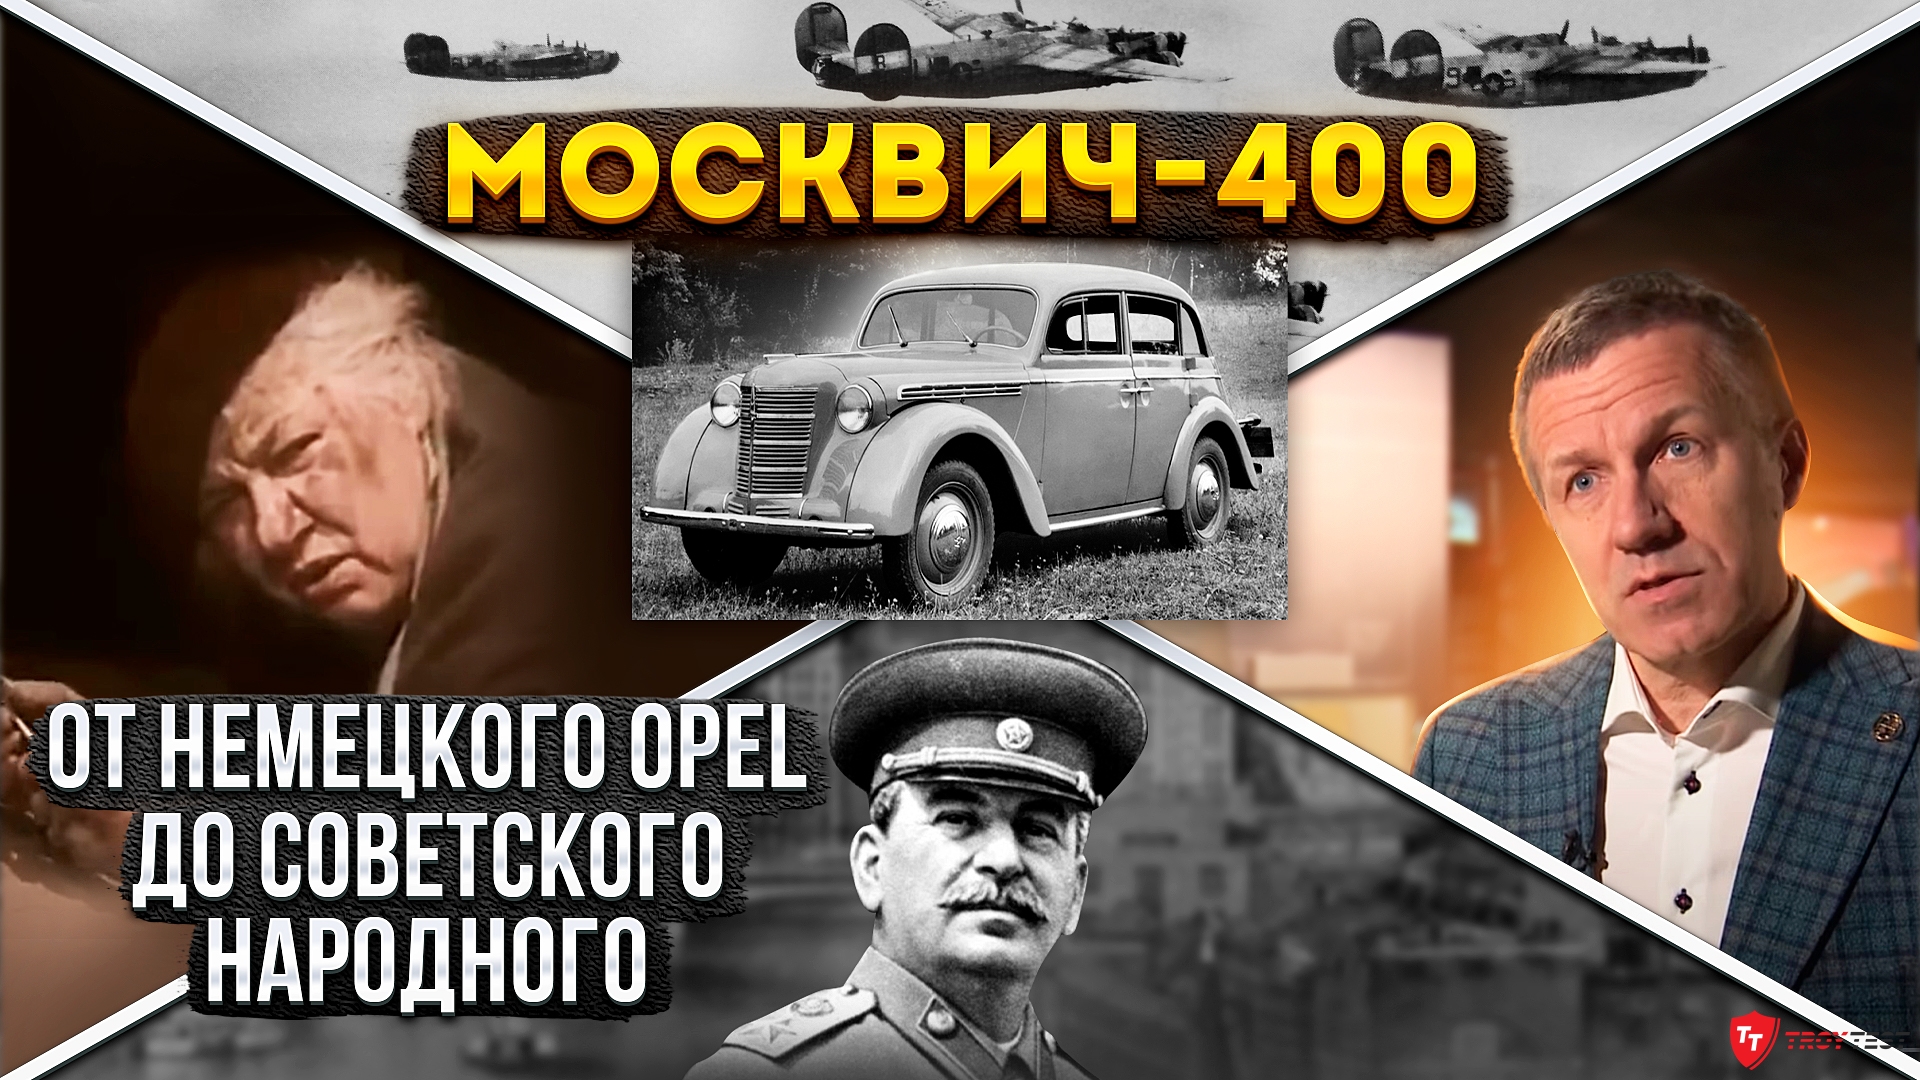 moskvich 400